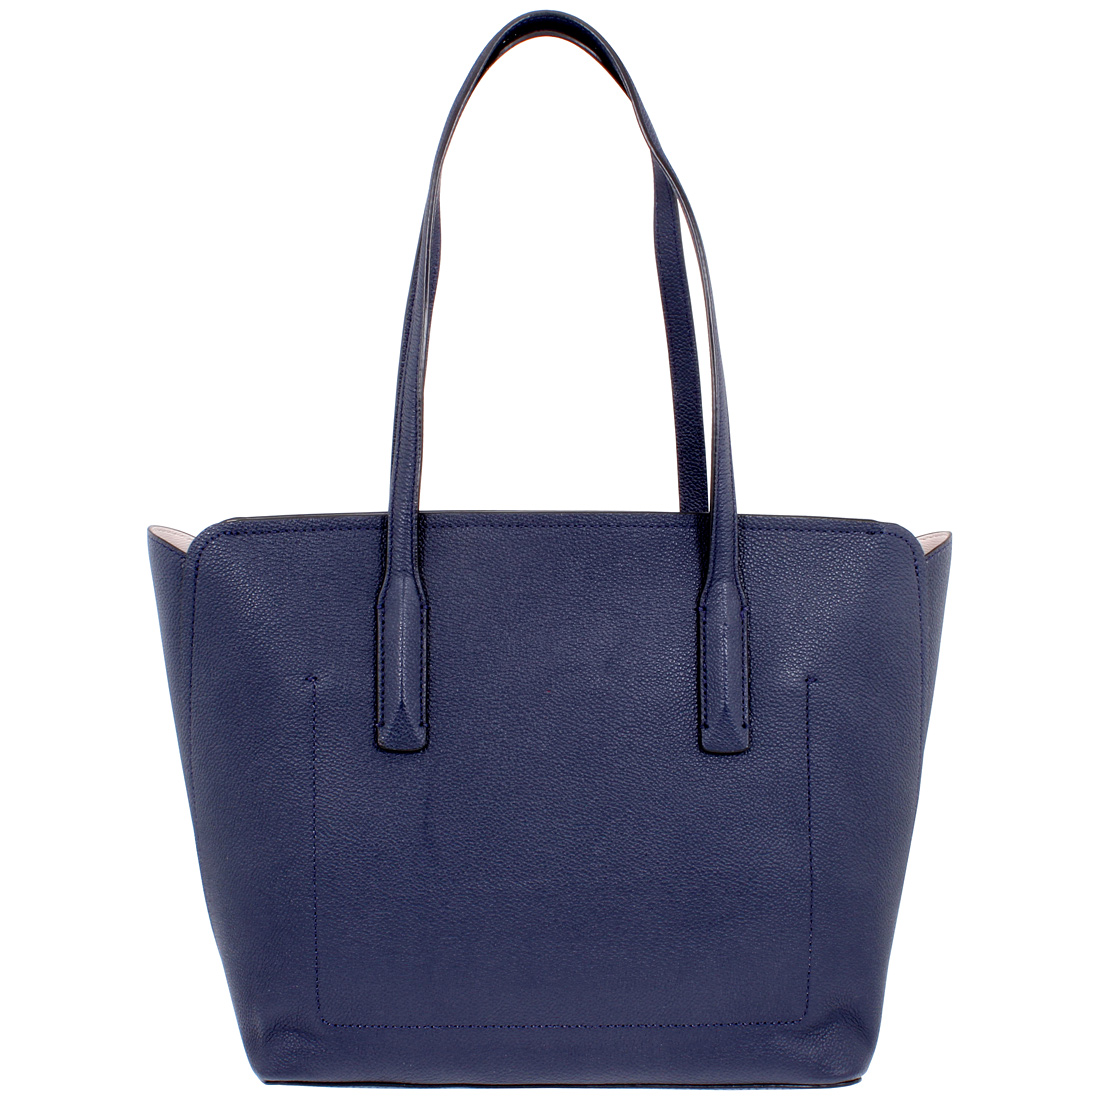 Navy Blue Kate Spade Handbags | Paul Smith